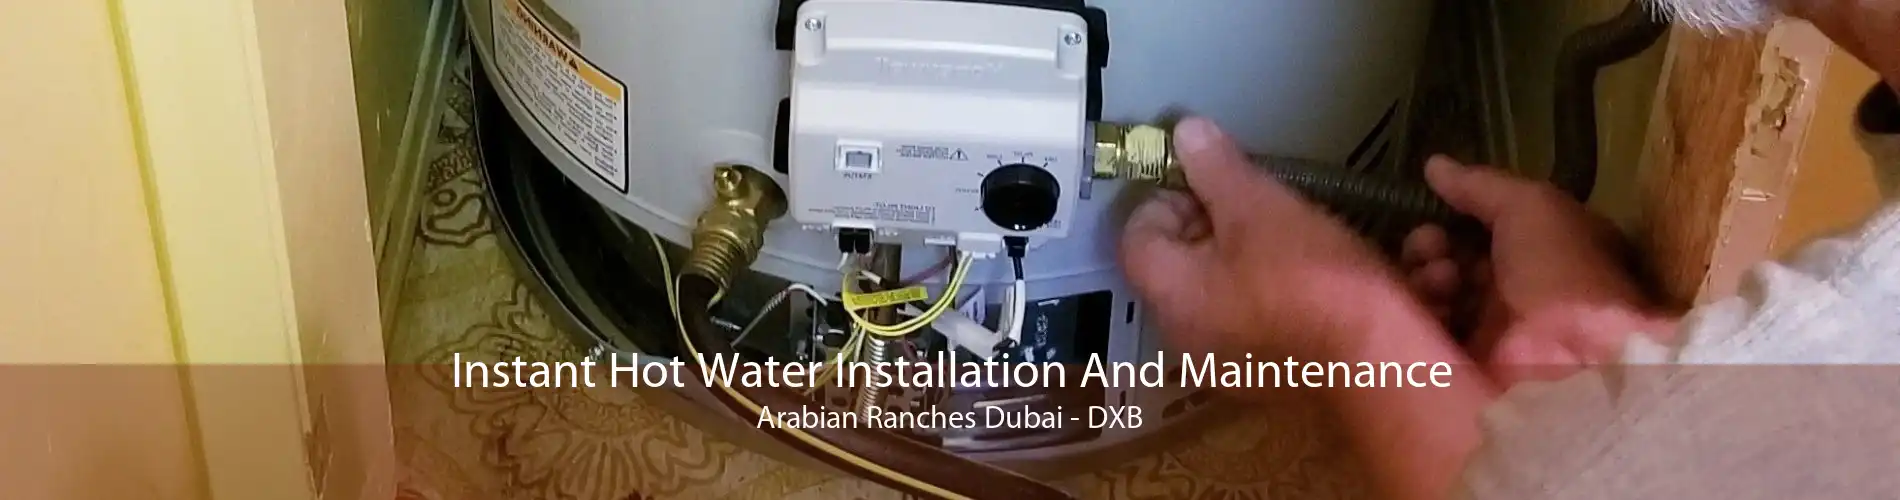 Instant Hot Water Installation And Maintenance Arabian Ranches Dubai - DXB